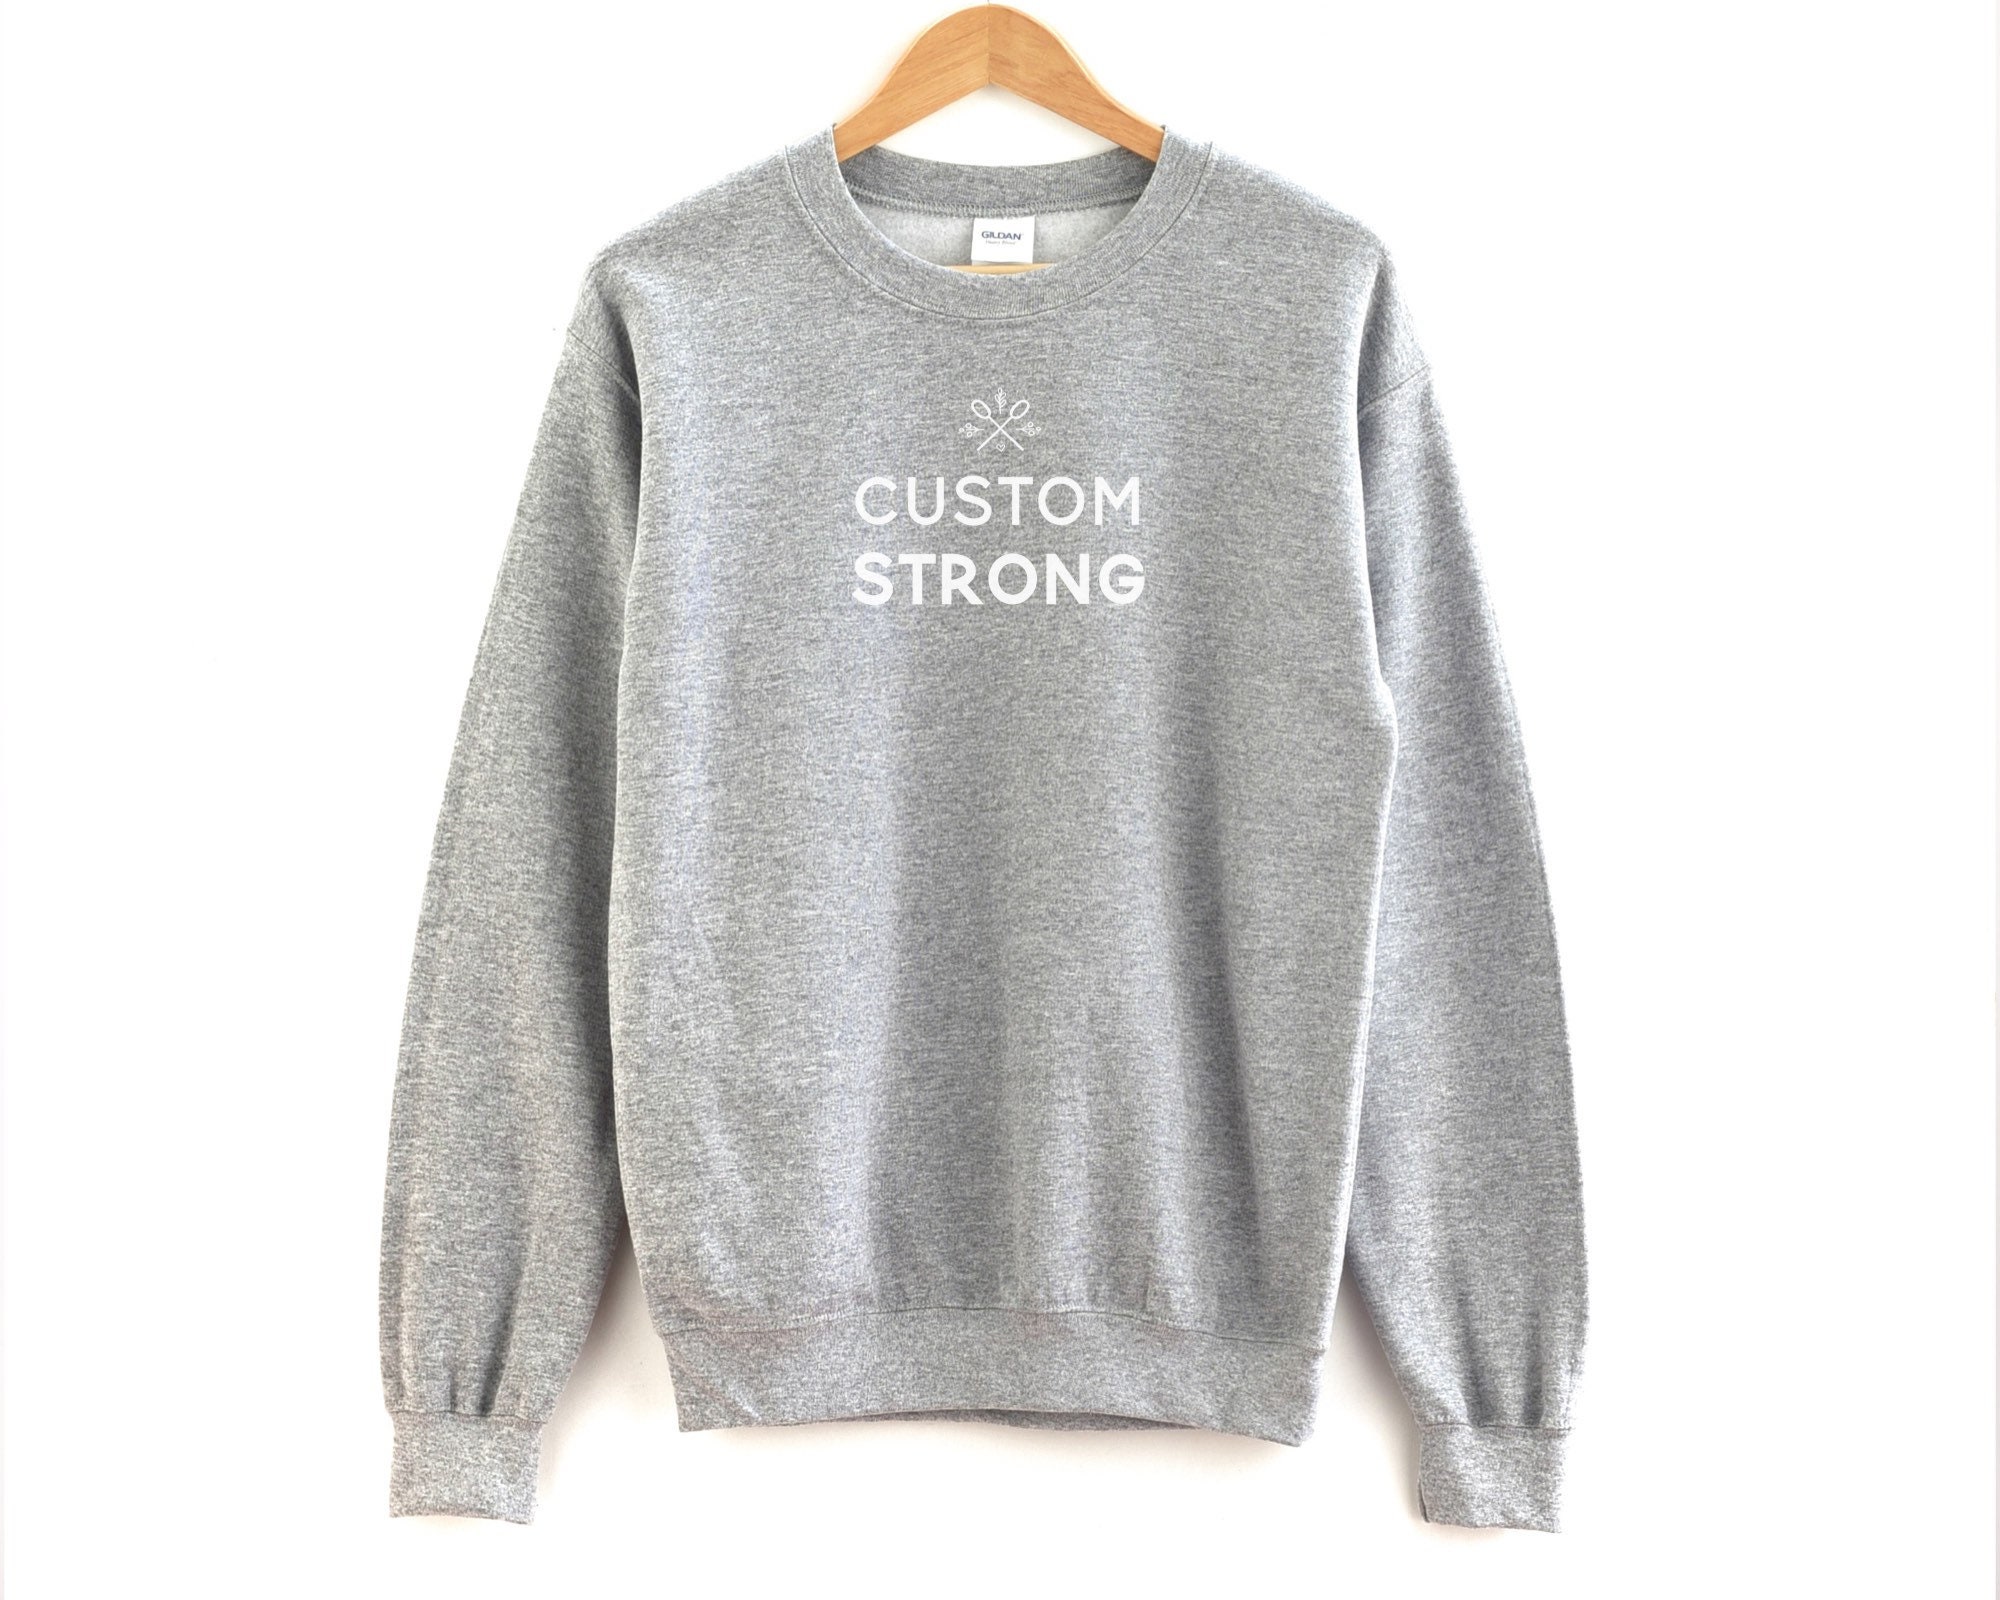 Custom Chronic Illness Sweatshirt Custom Strong Crew Neck | Etsy